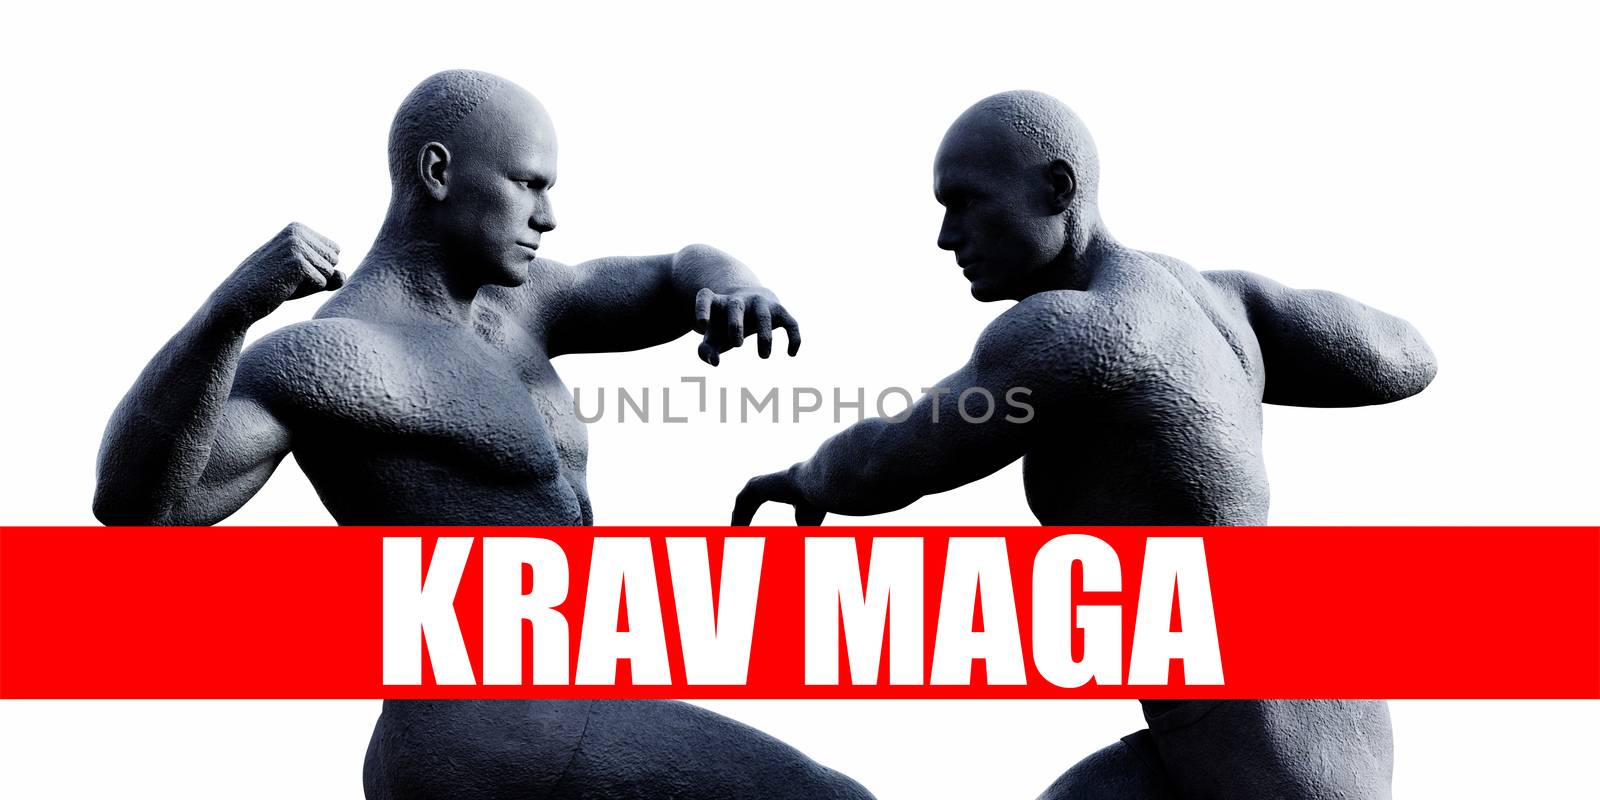 Krav maga Class Combat Fighting Sports Background